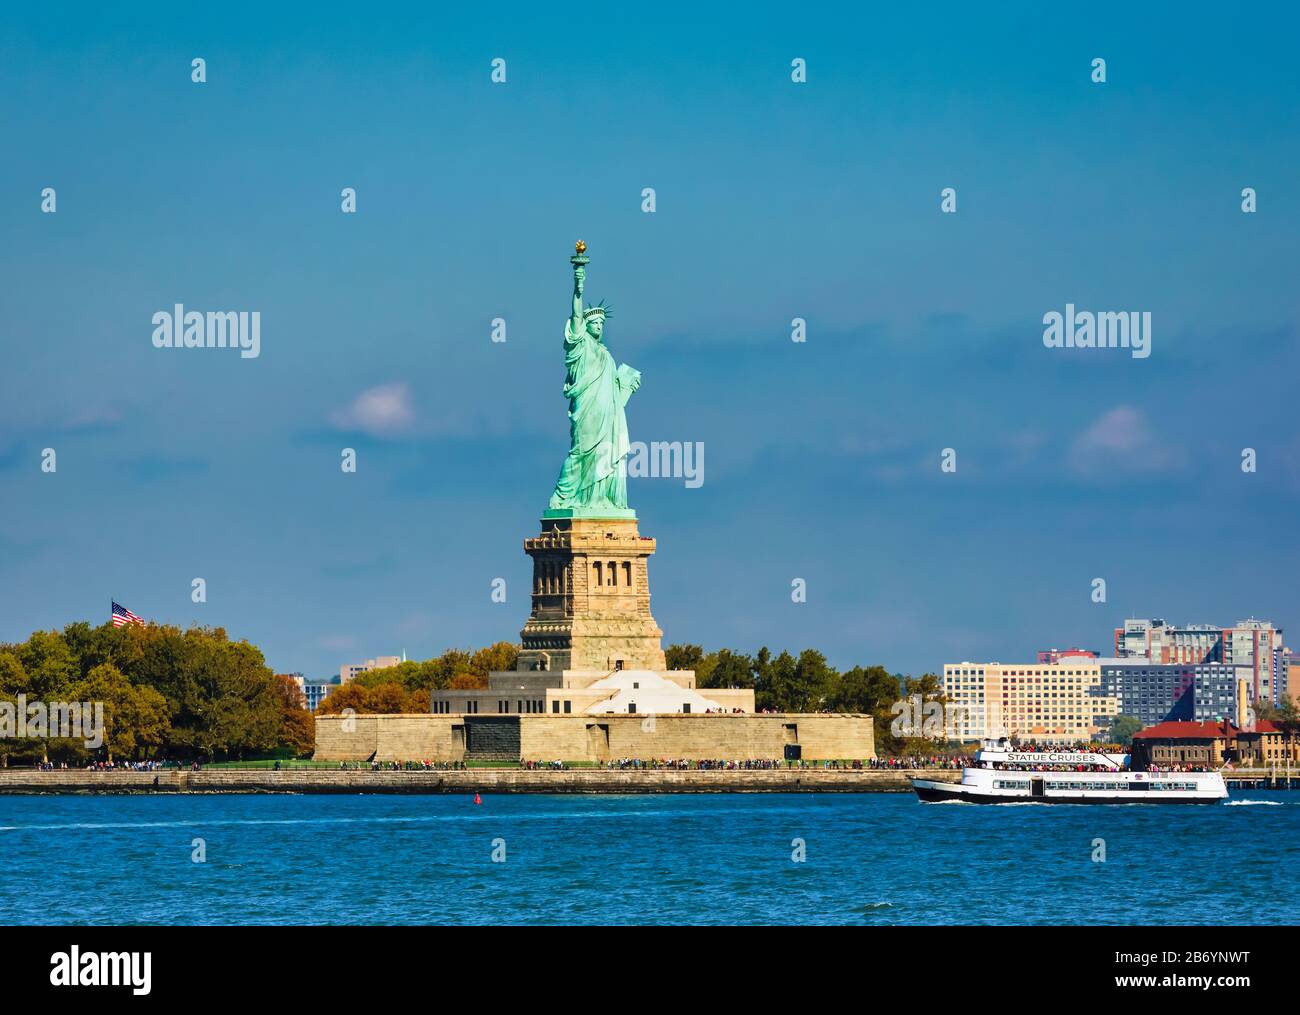 Estatua De La Libertad En Liberty Island, Nueva York, Estado De Nueva York, Estados Unidos De América. La estatua de 151 pies o 46 metros de altura era un regalo para los EE.UU. F Foto de stock